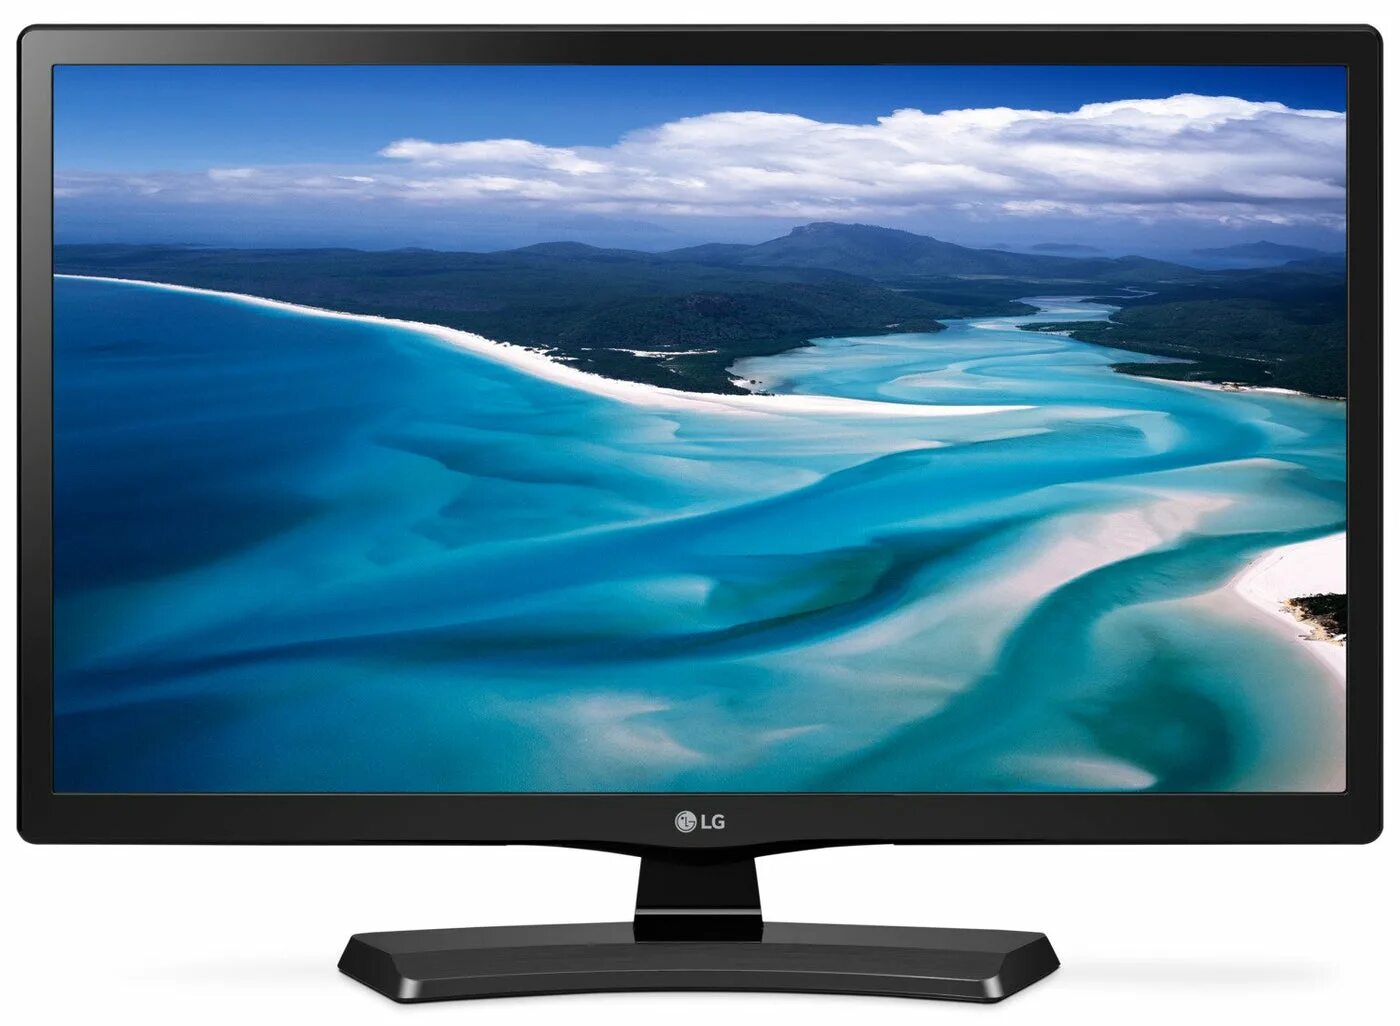 LG 24 Smart TV. Телевизор LG 24lb540u. Samsung 24 p2470hd. Led телевизор 24 LG 24lh451ueac. Телевизоры 24 смарт рейтинг